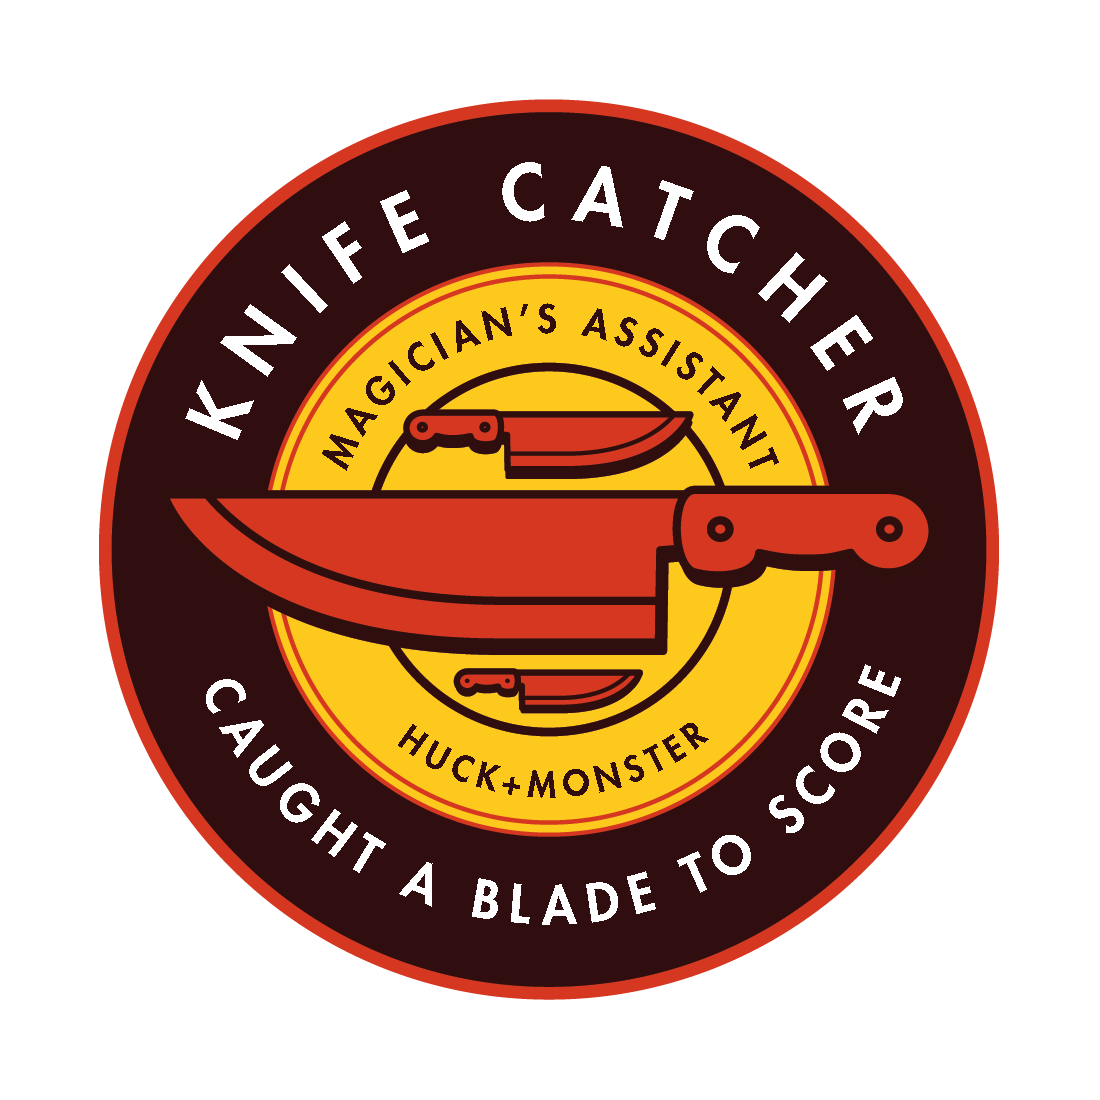 Knife Catcher